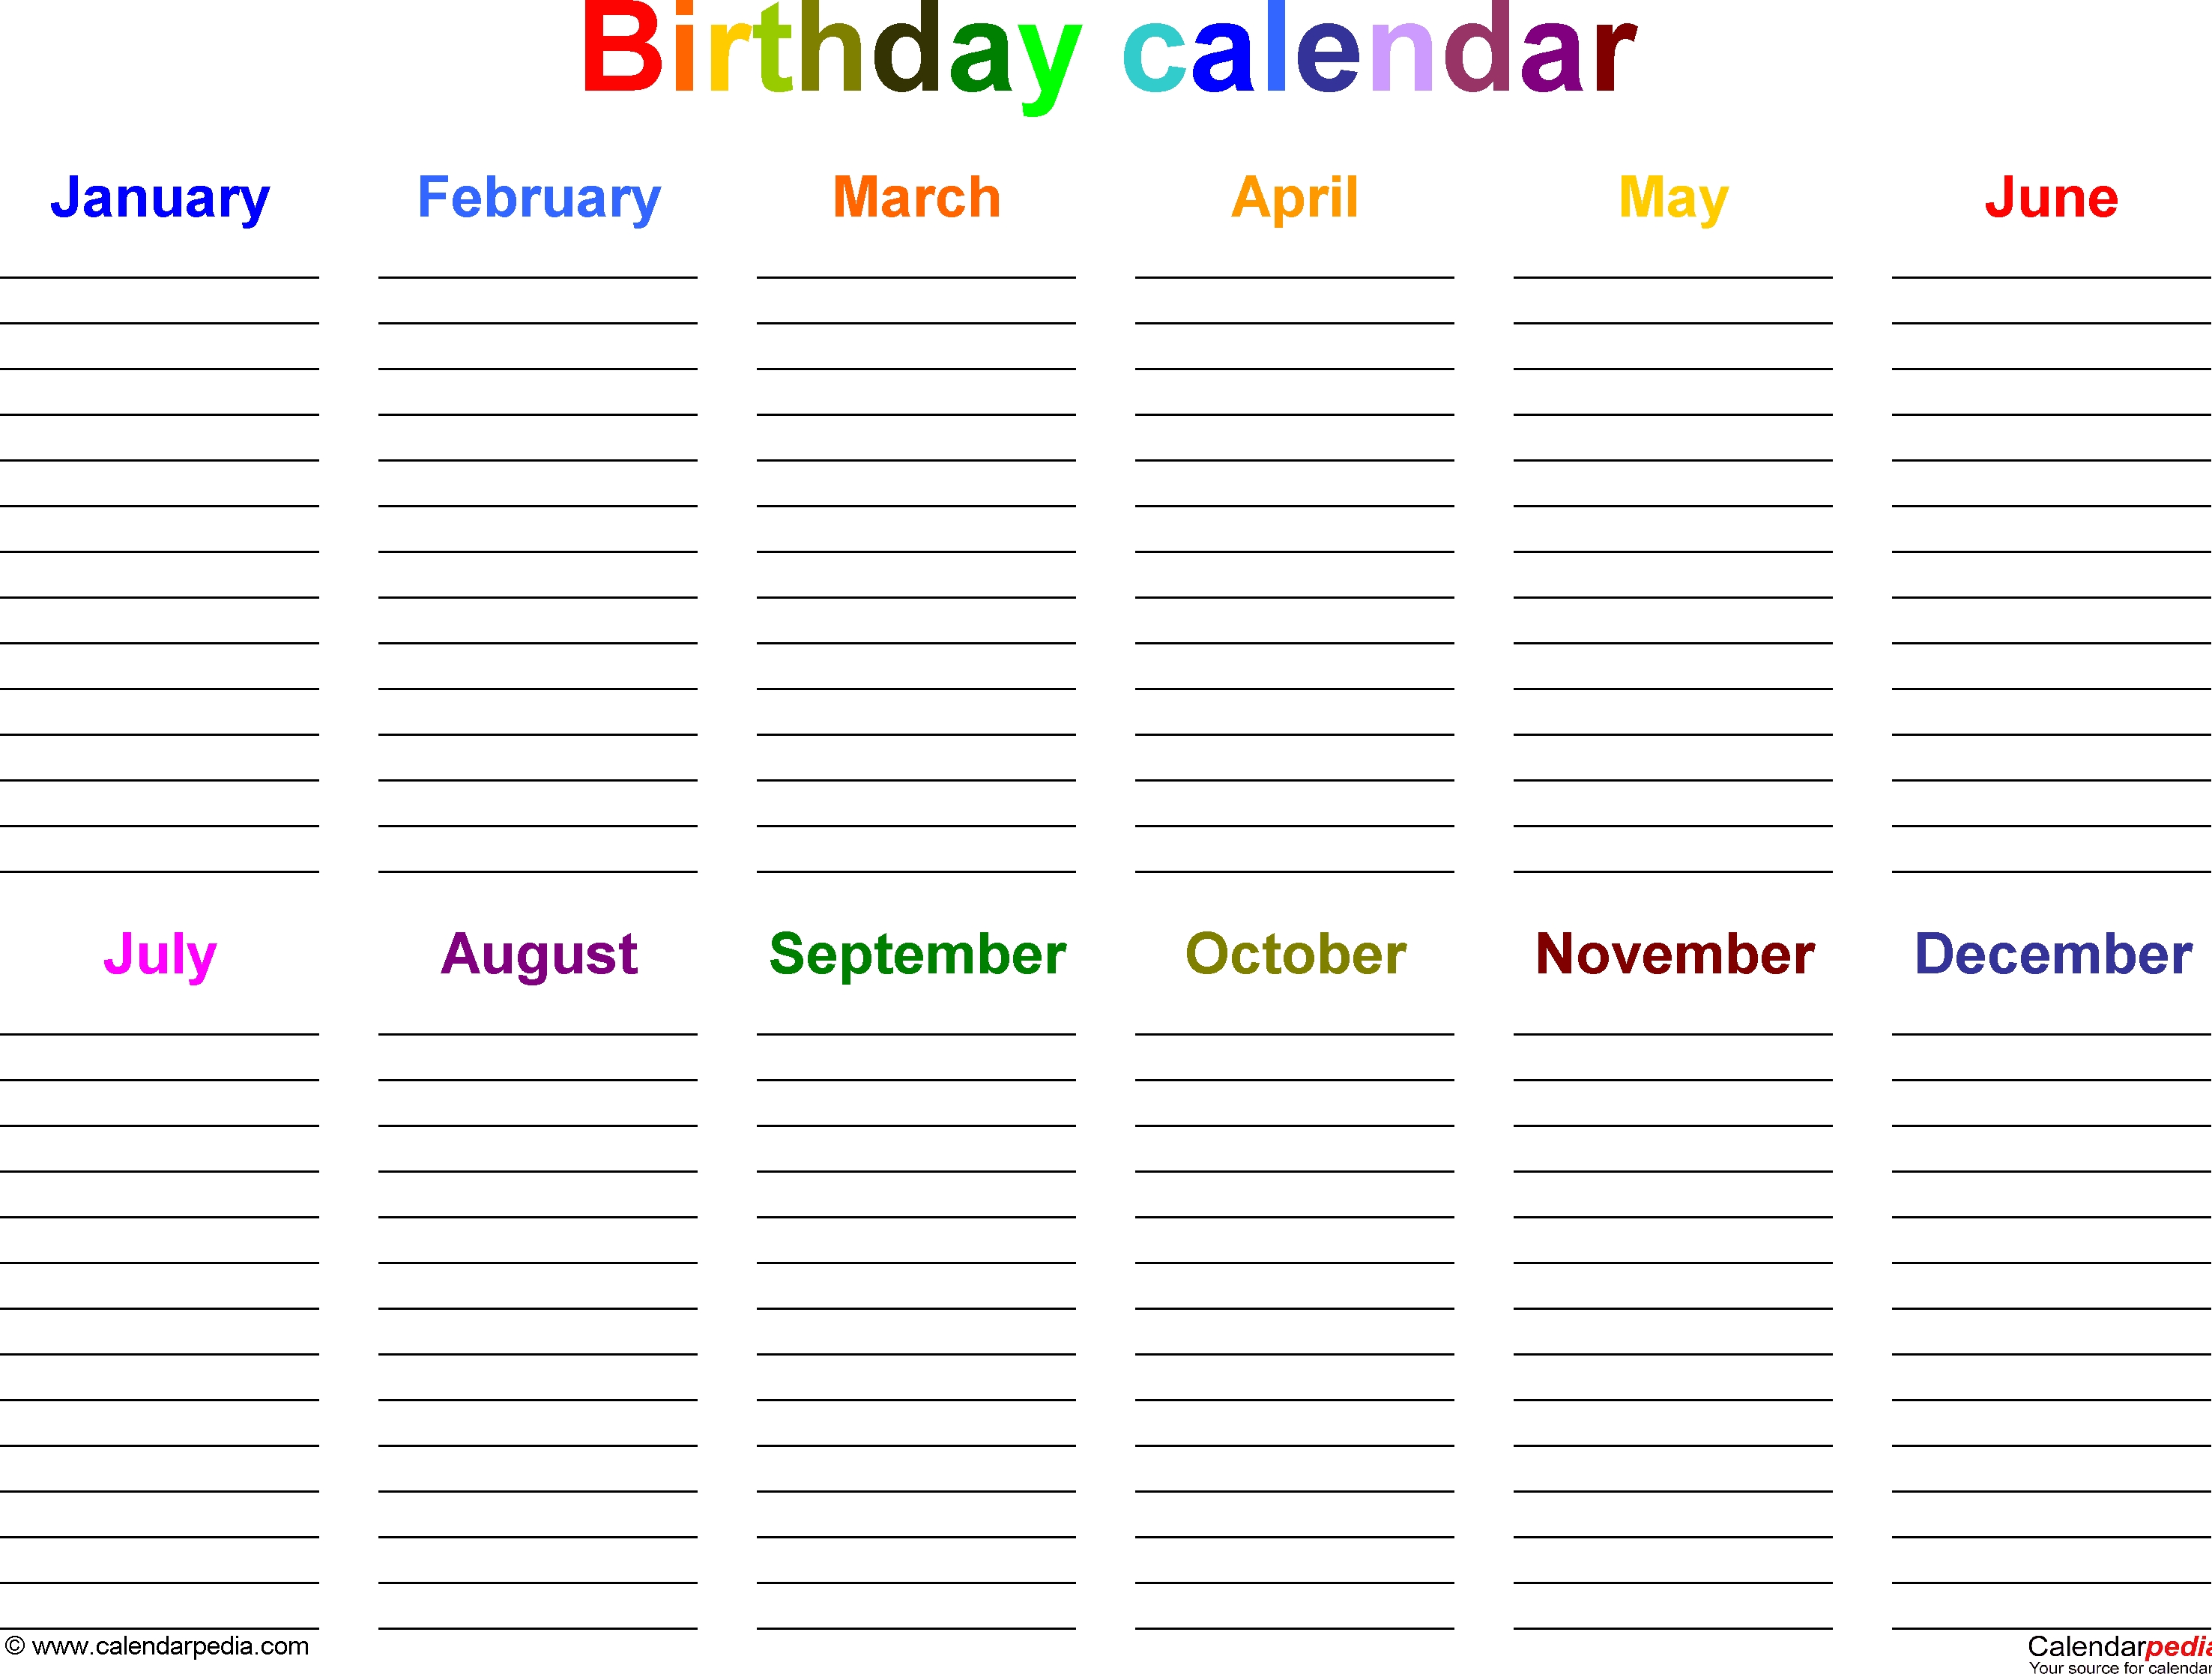 free calendar template for birthdays 62